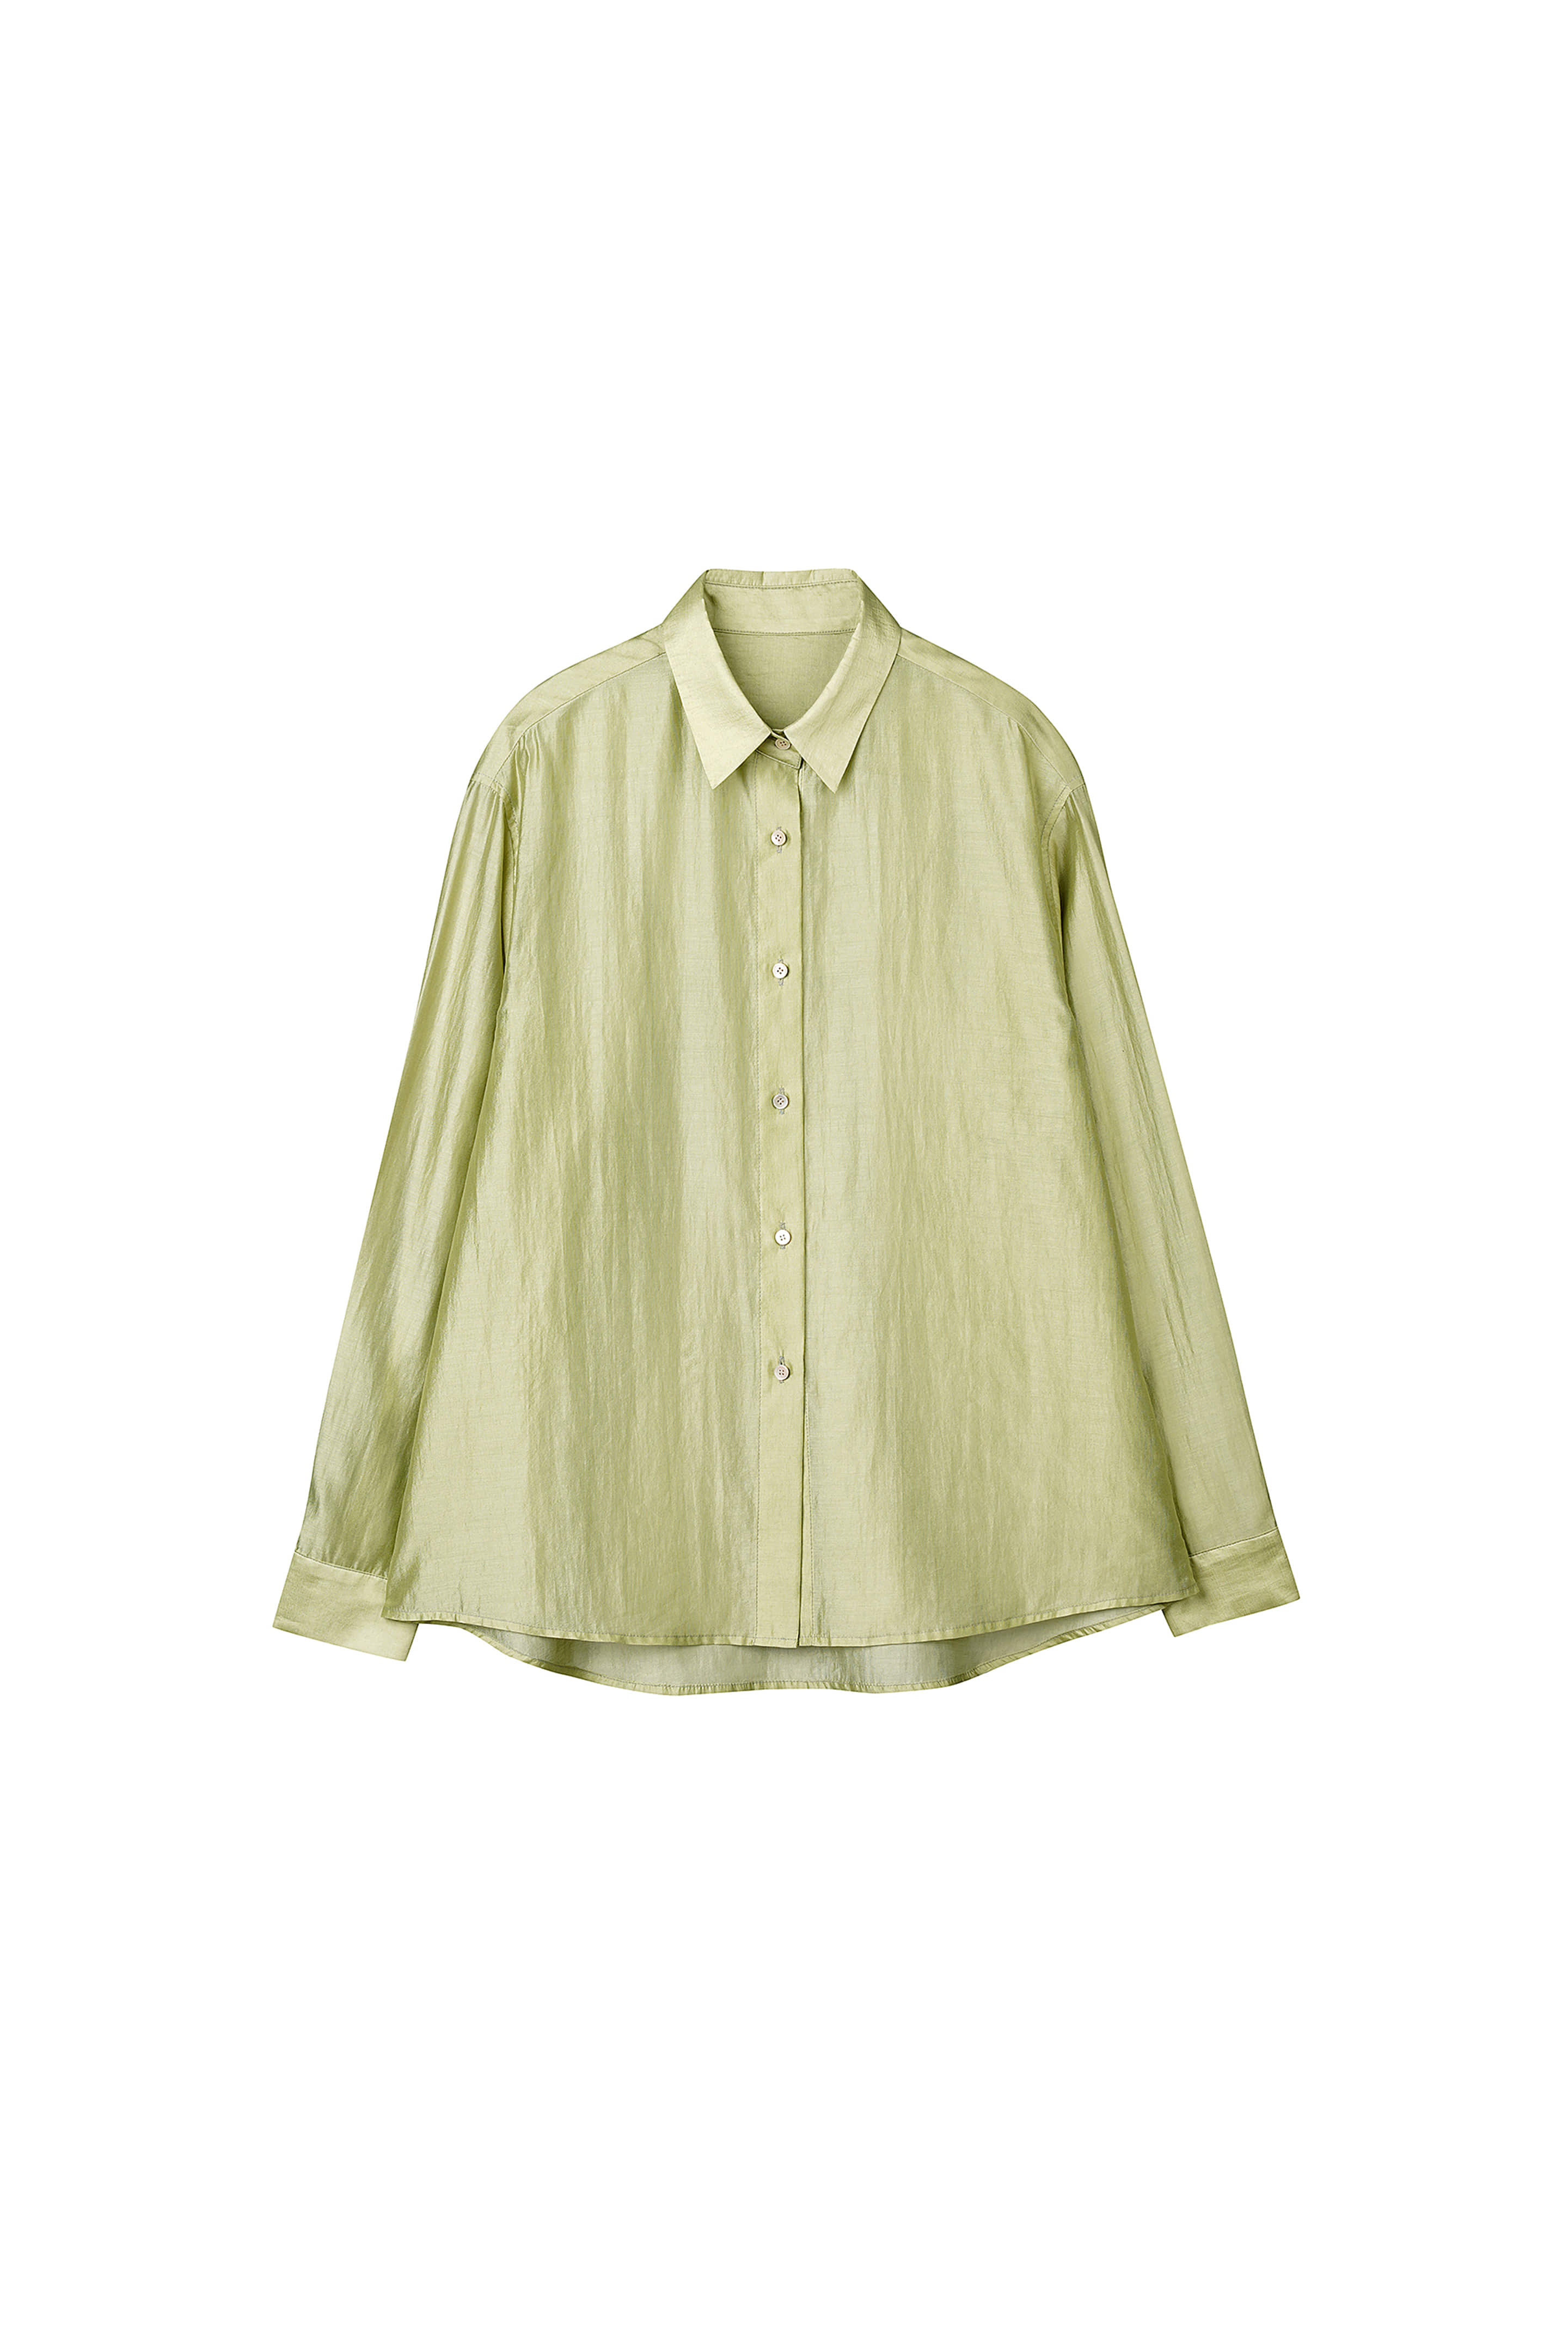 3rd) Sunny Shirt Lime